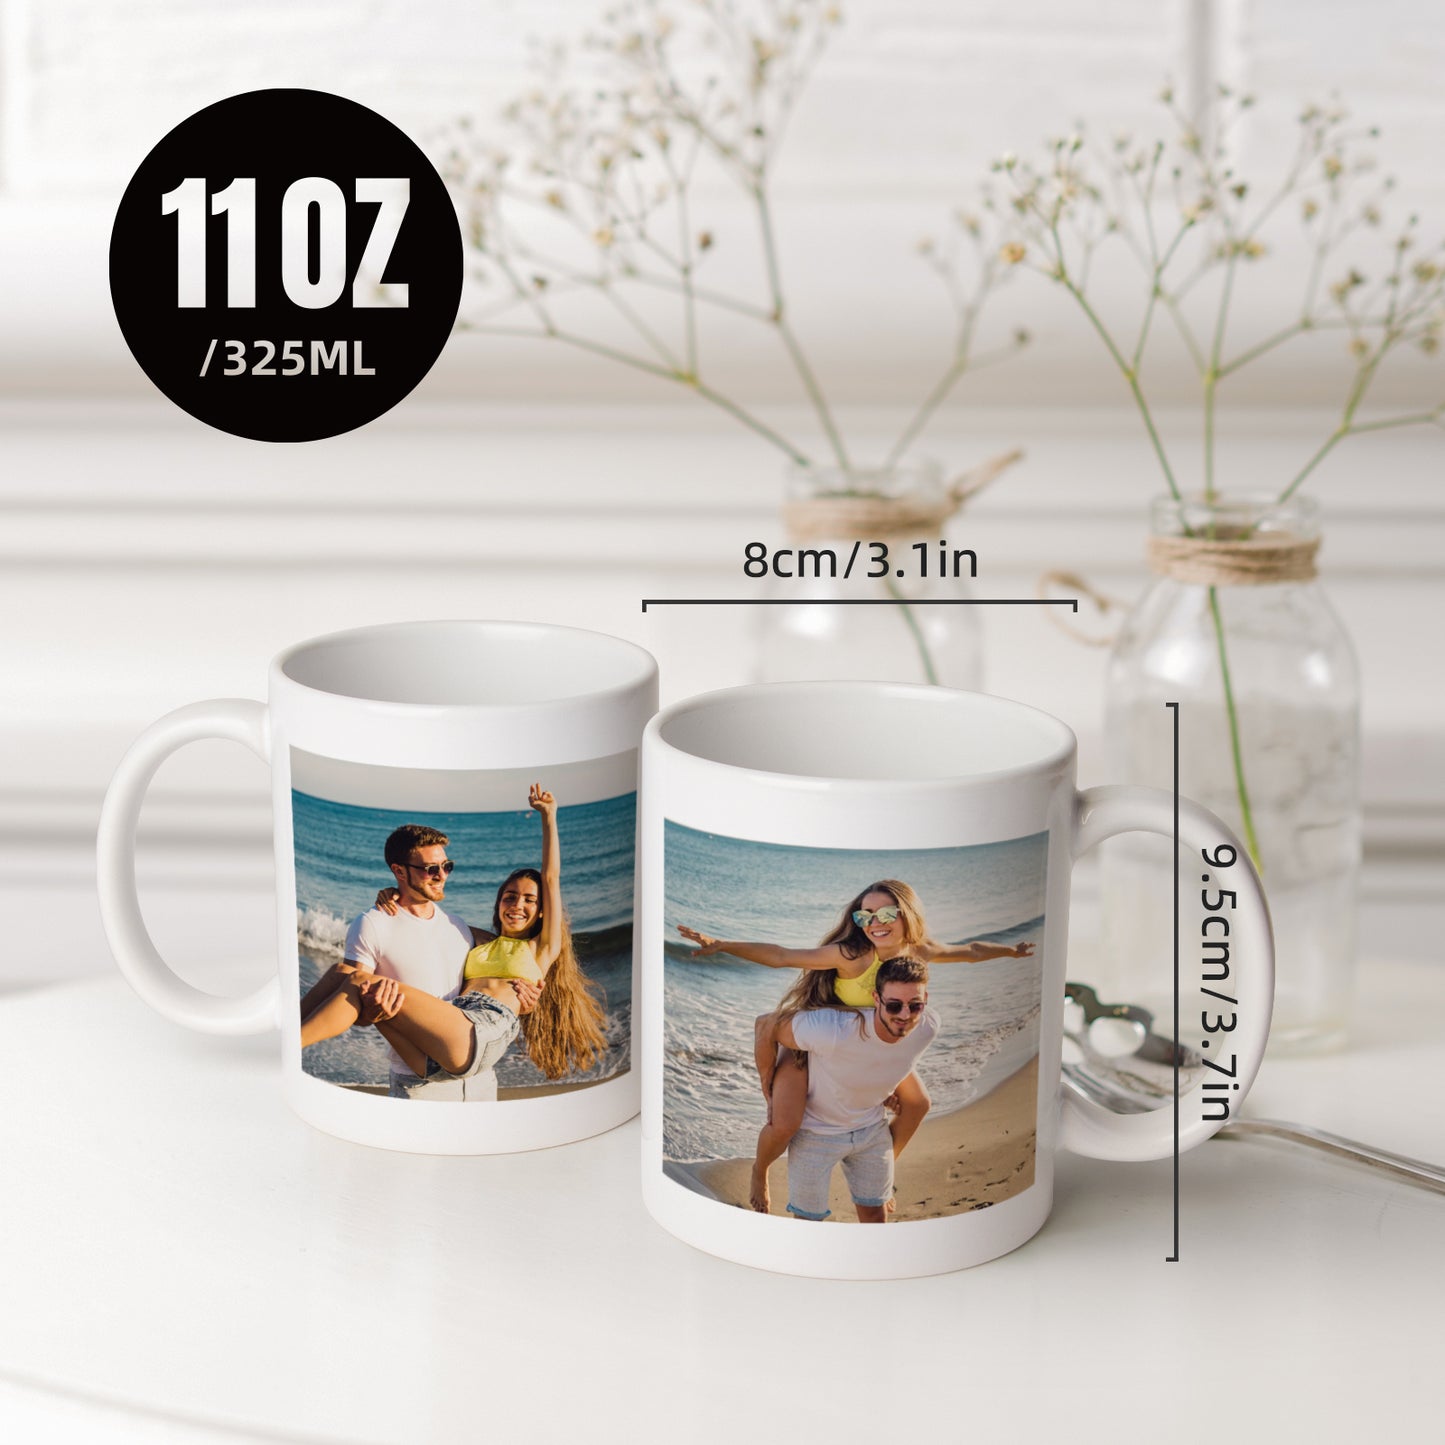 Customizedbee Couple Mug Set of 2  - Ceramic Coffee Mug with Custom Photo Name Text